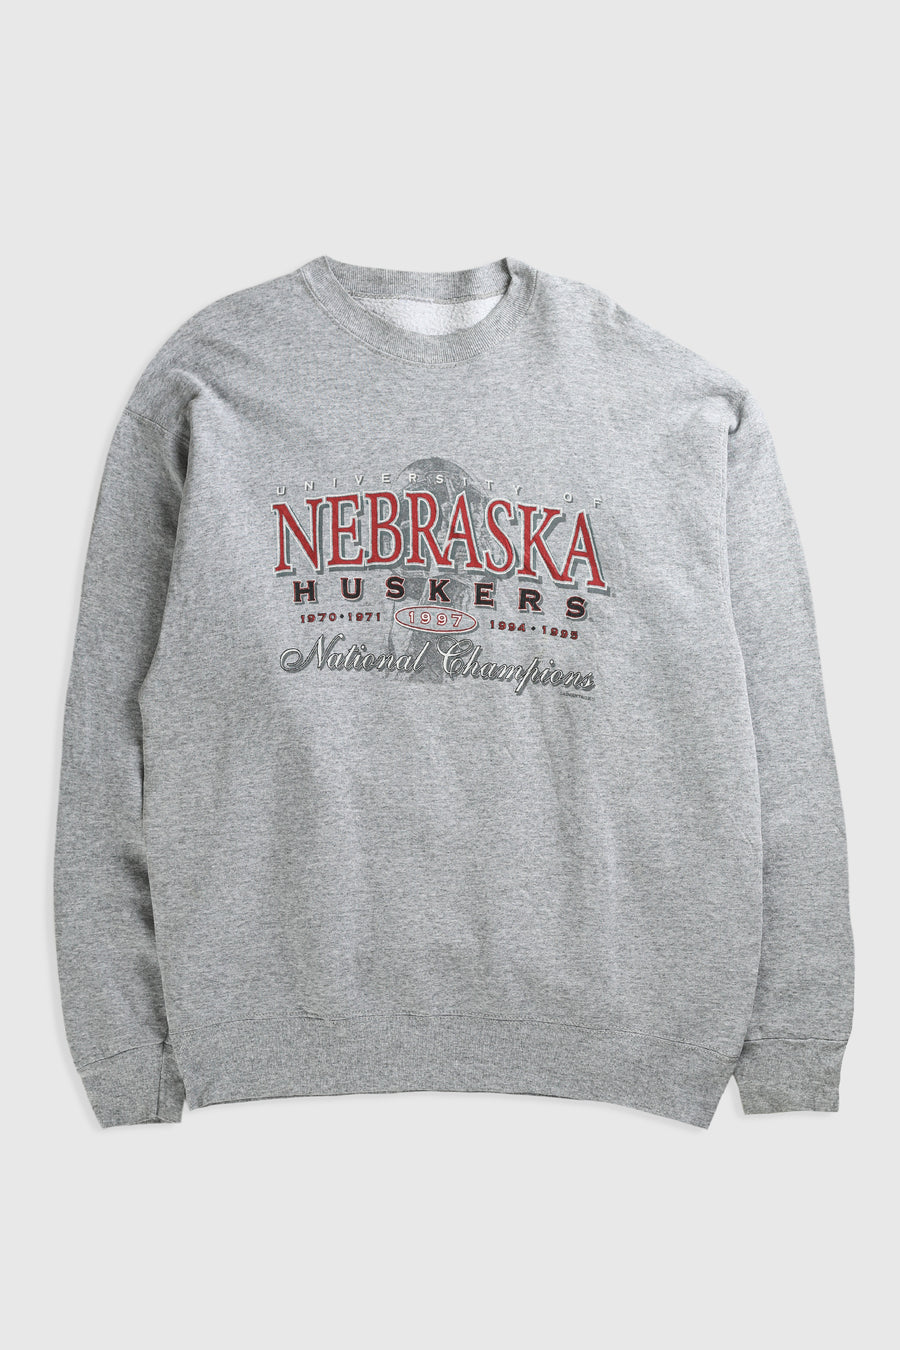 Vintage University of Nebraska Sweatshirt